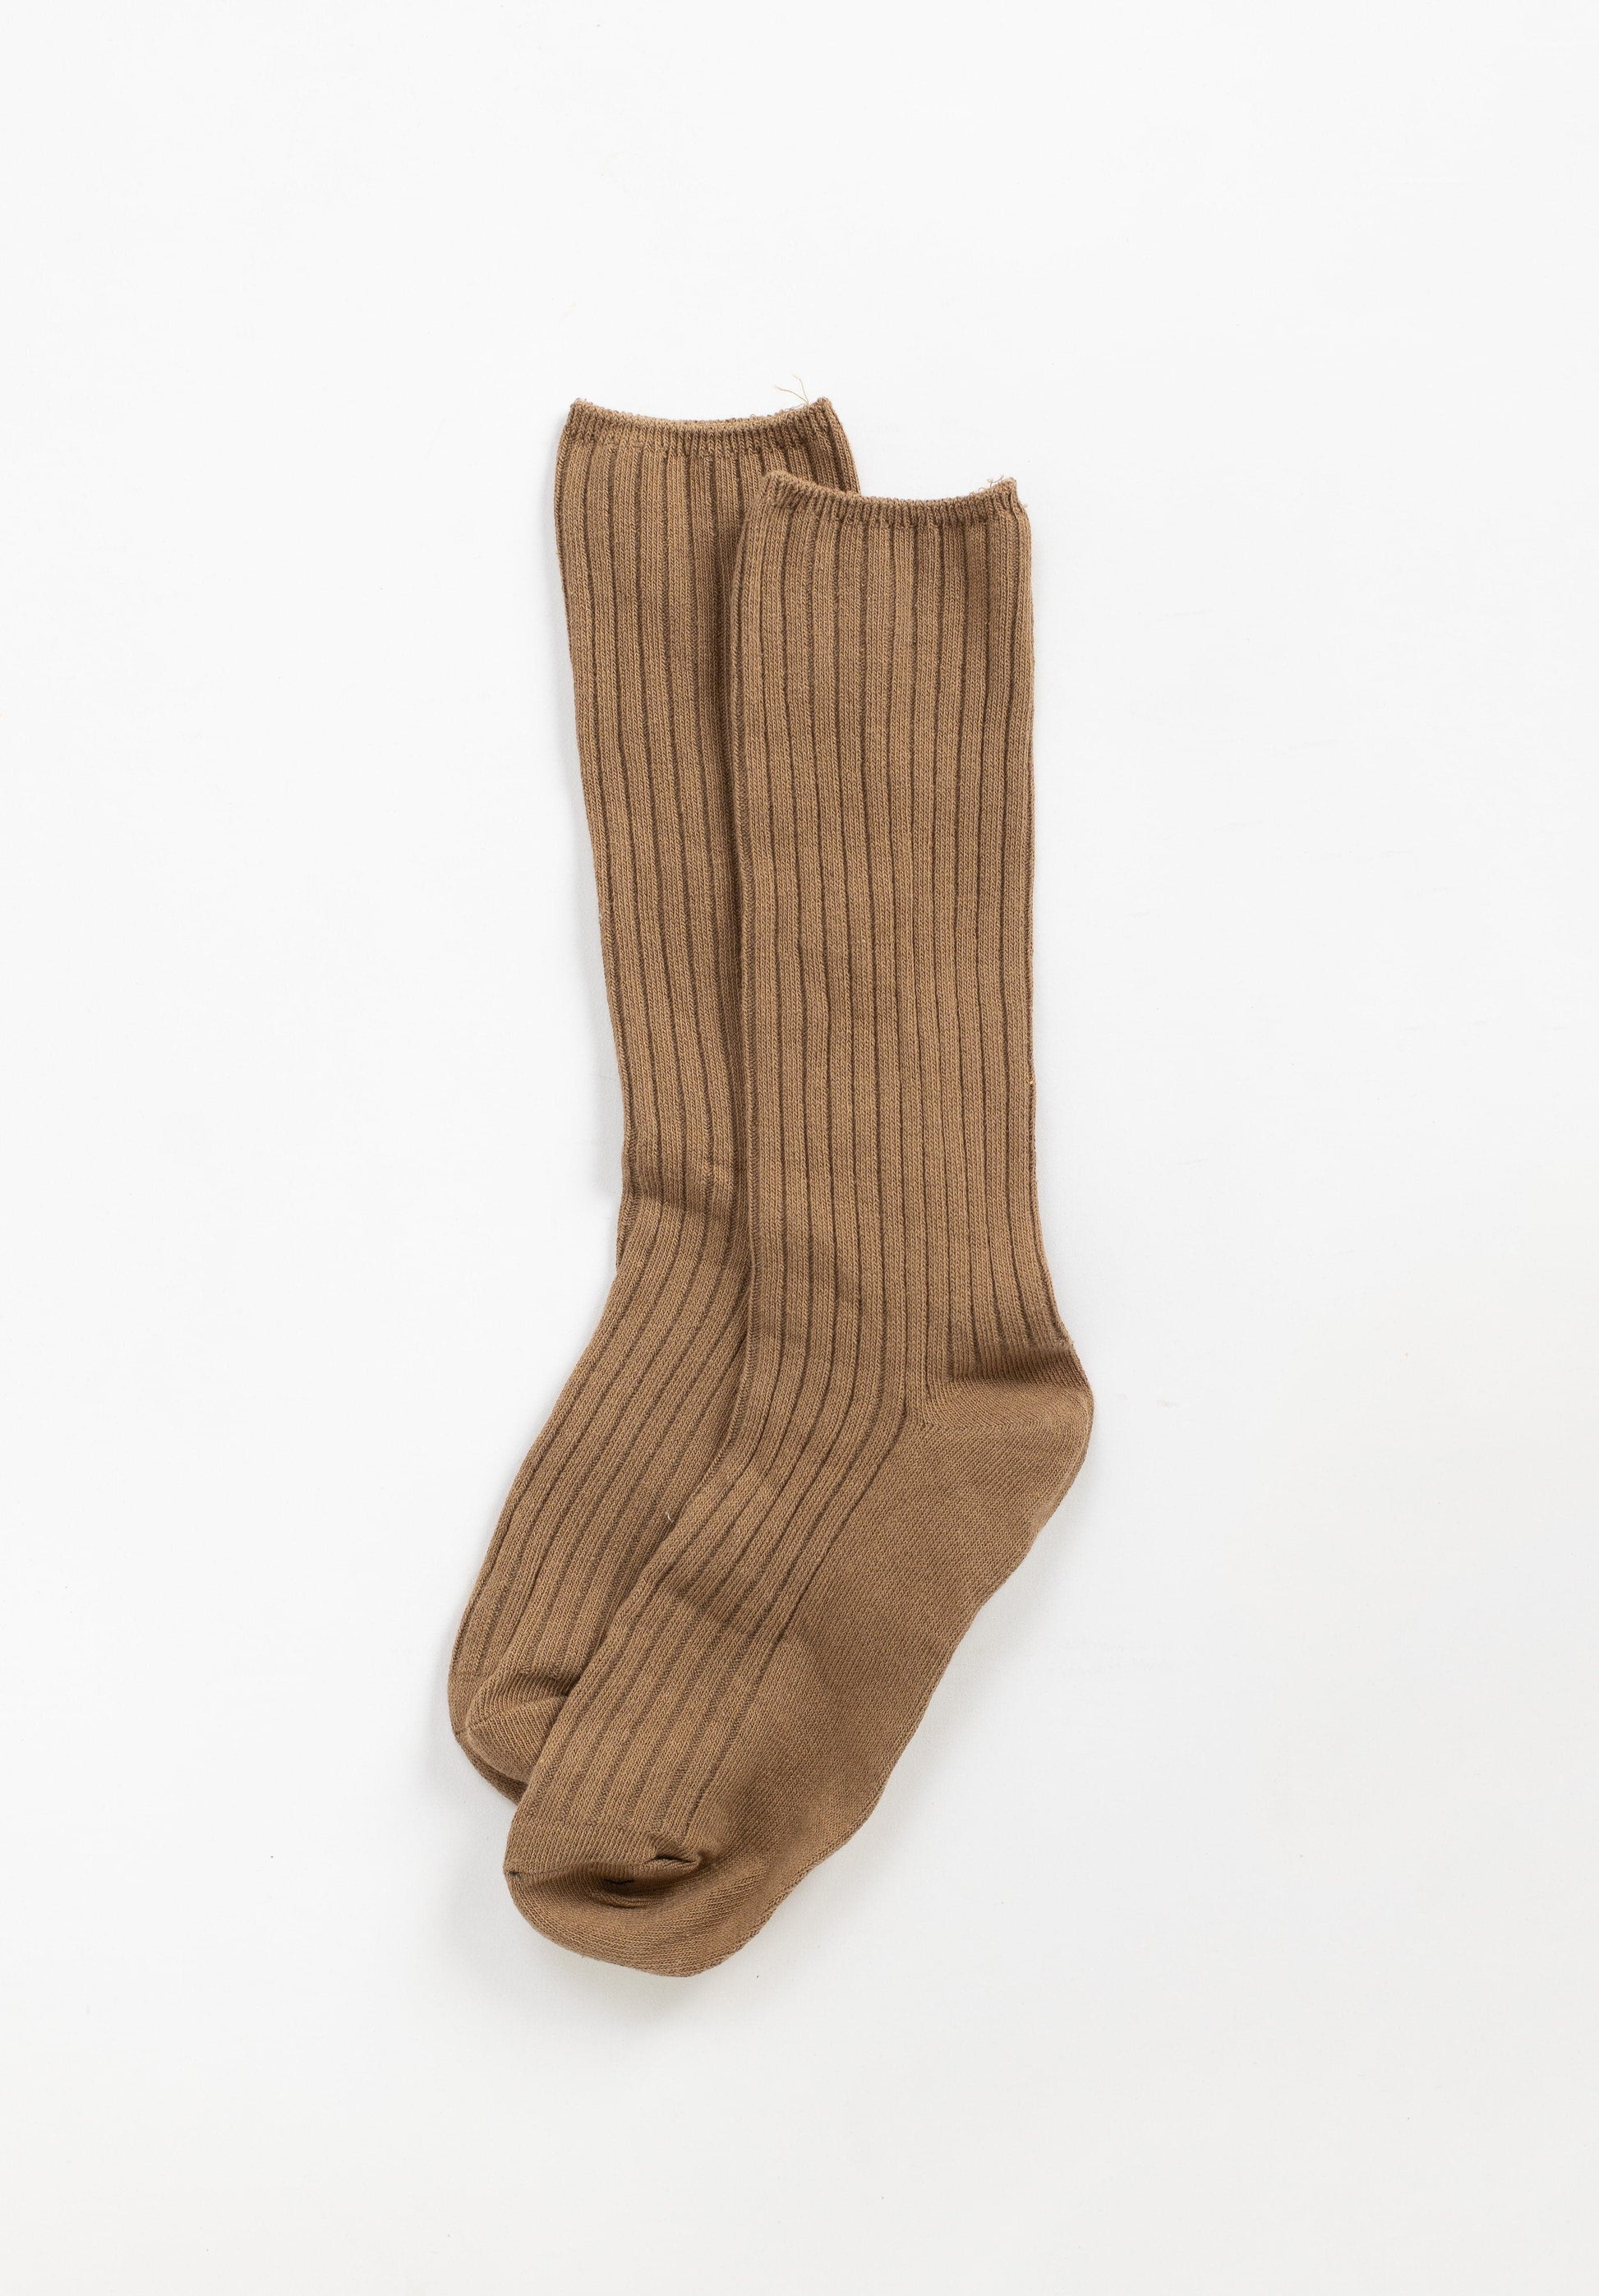 Sandhill Ribbed Socks WOMEN'S SOCKS Ali Express Khaki OS 